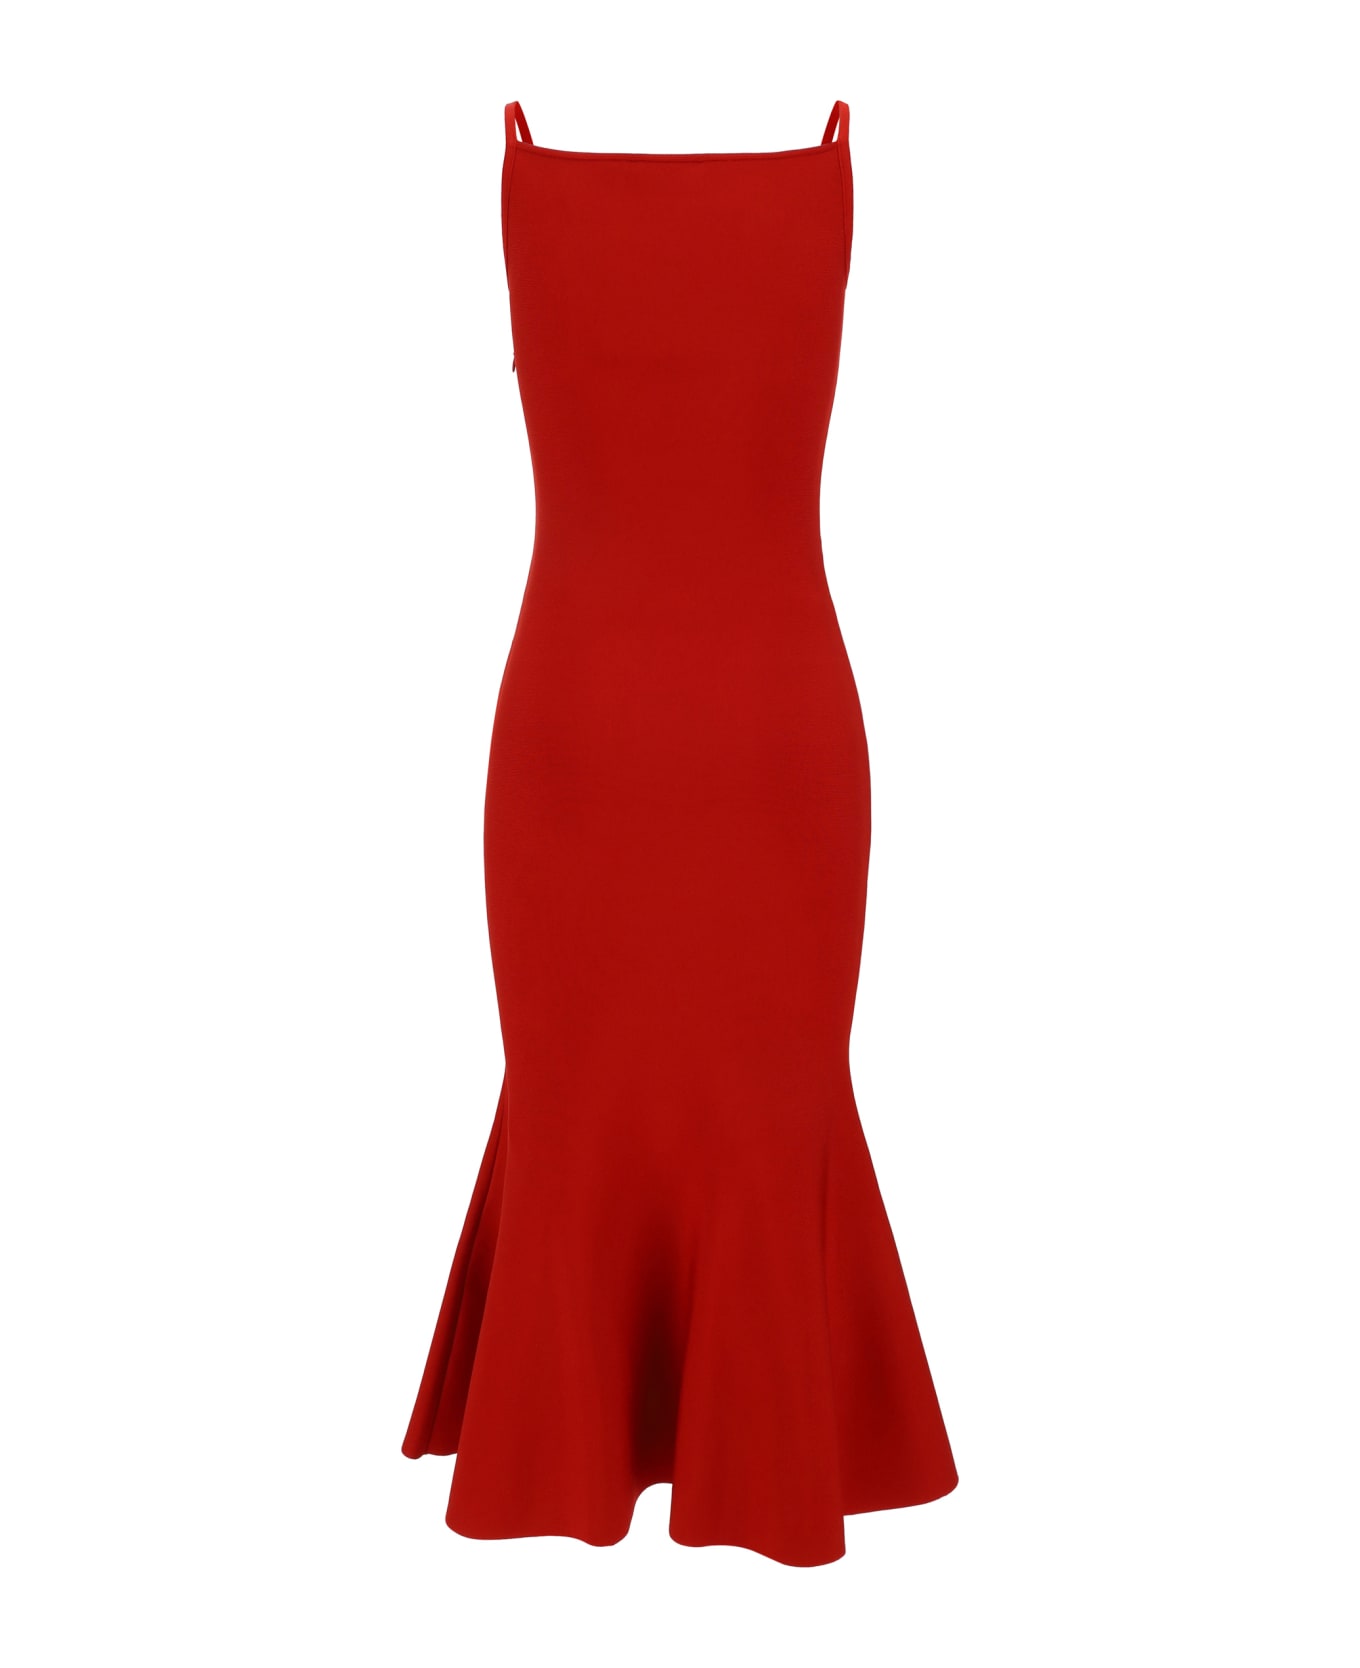 Alexander McQueen Flared Knit Dress - Lust Red